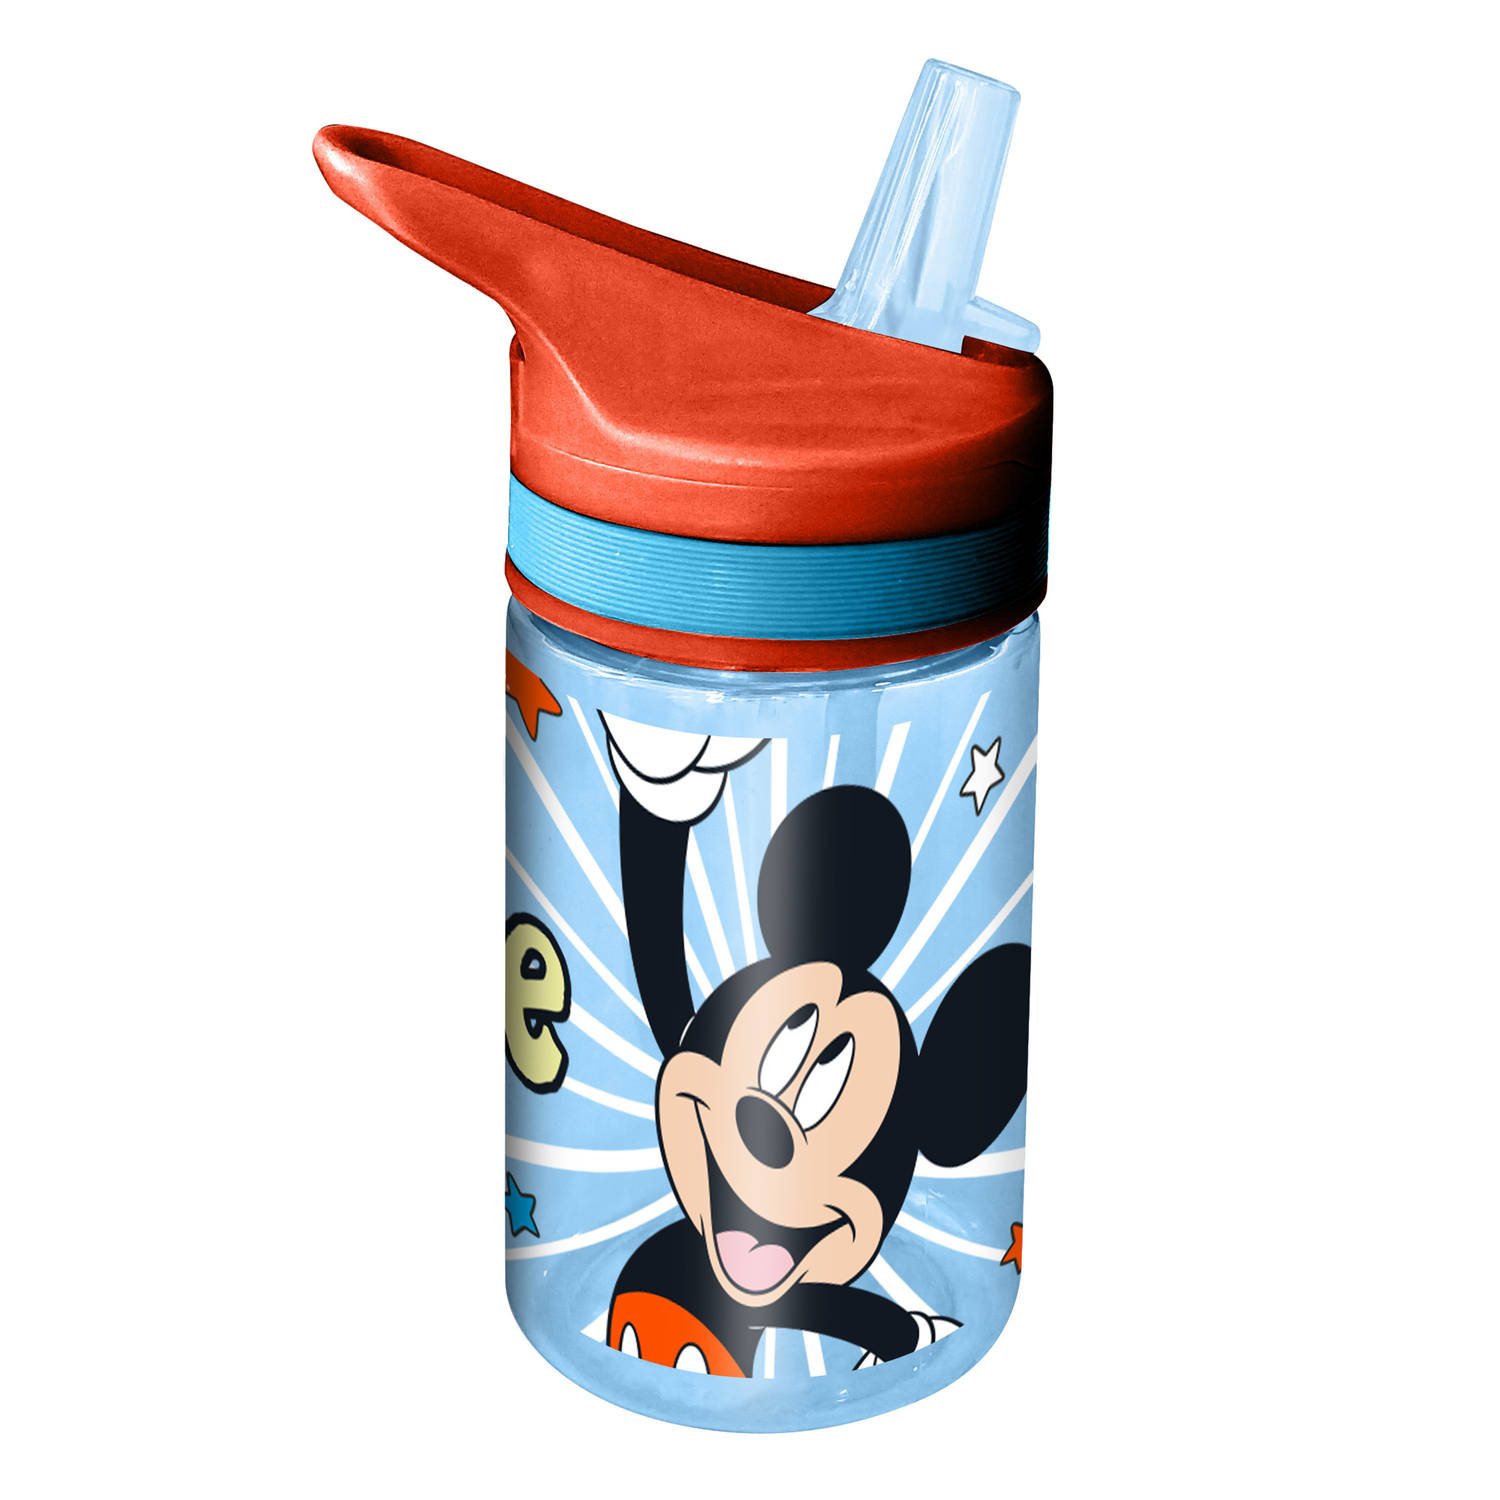 Disney Mickey Mouse drinkfles-drinkbeker-bidon met drinktuitje blauw kunststof 400 ml Schoolbekers